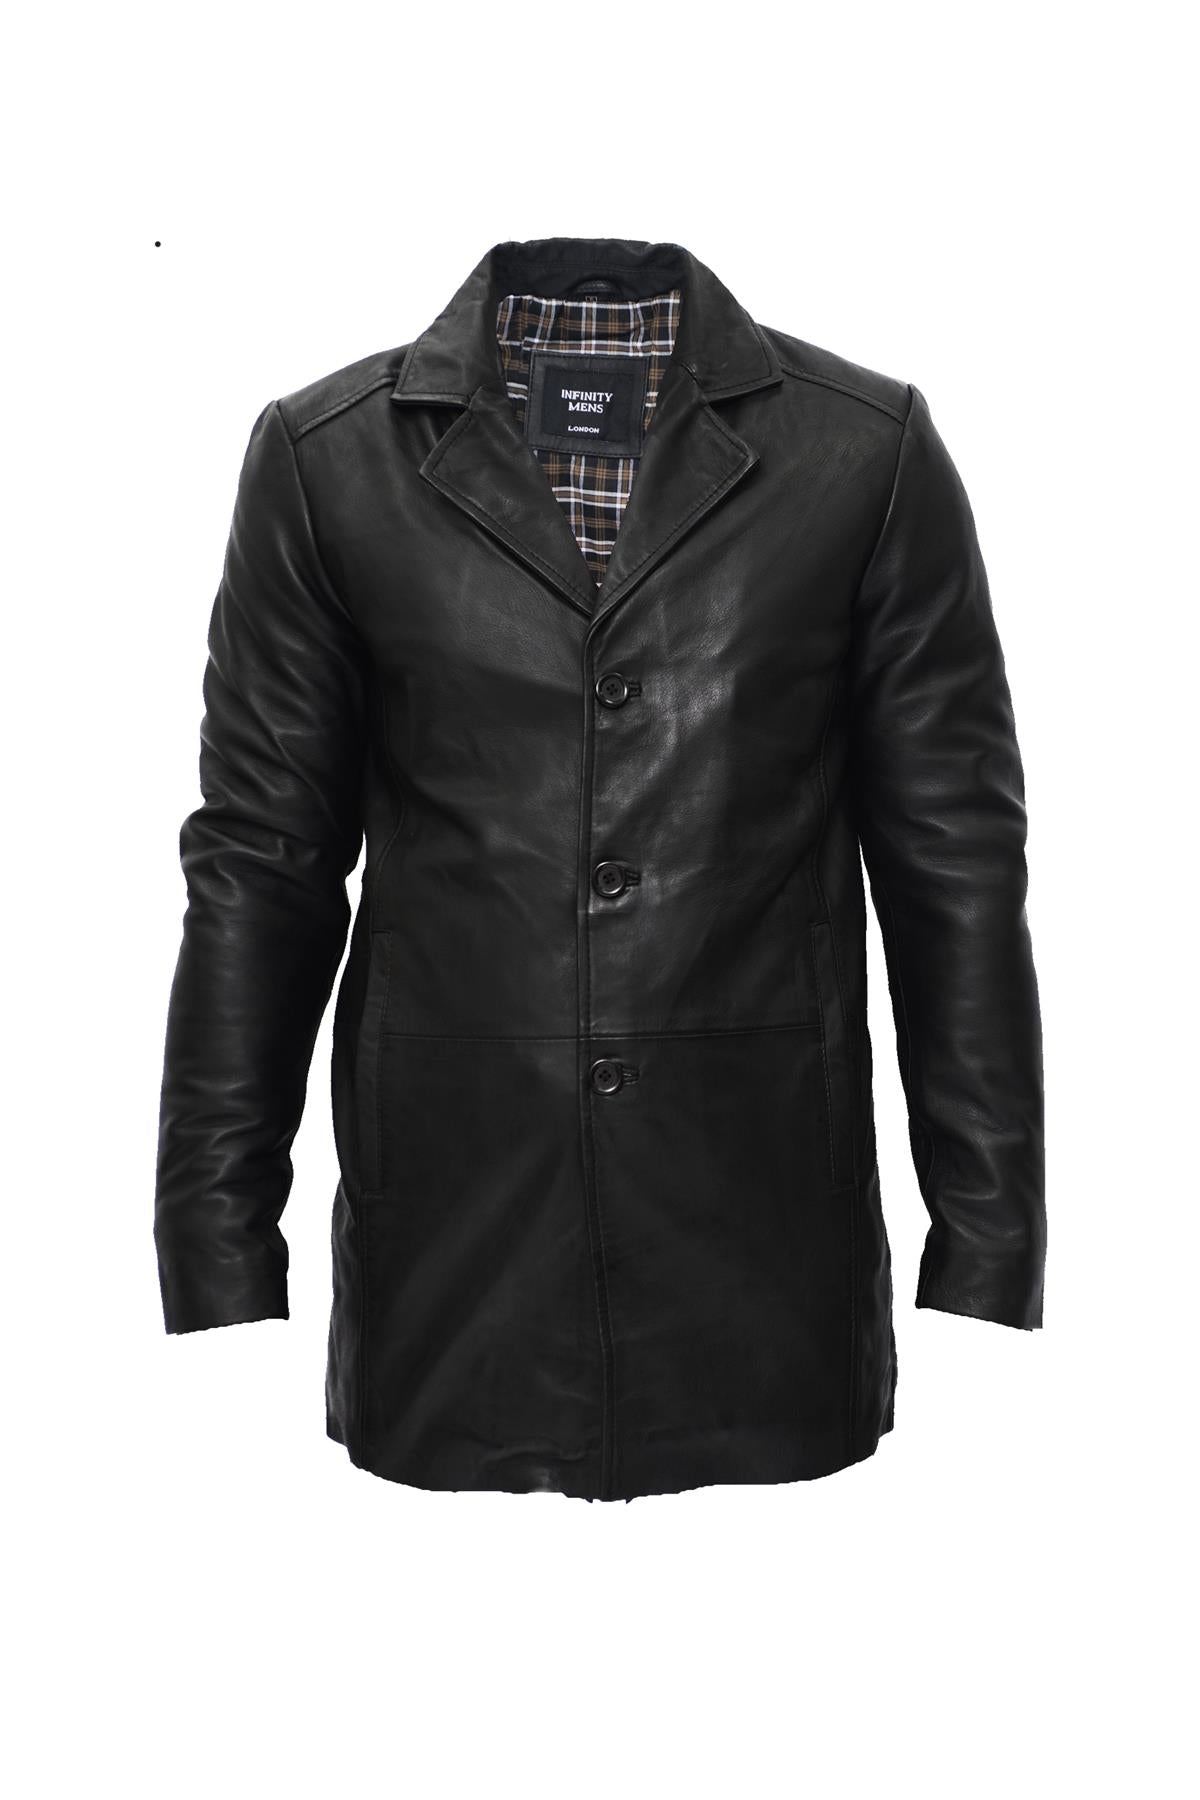 Mens 3/4 Black Leather Cromby Coat-Rosario